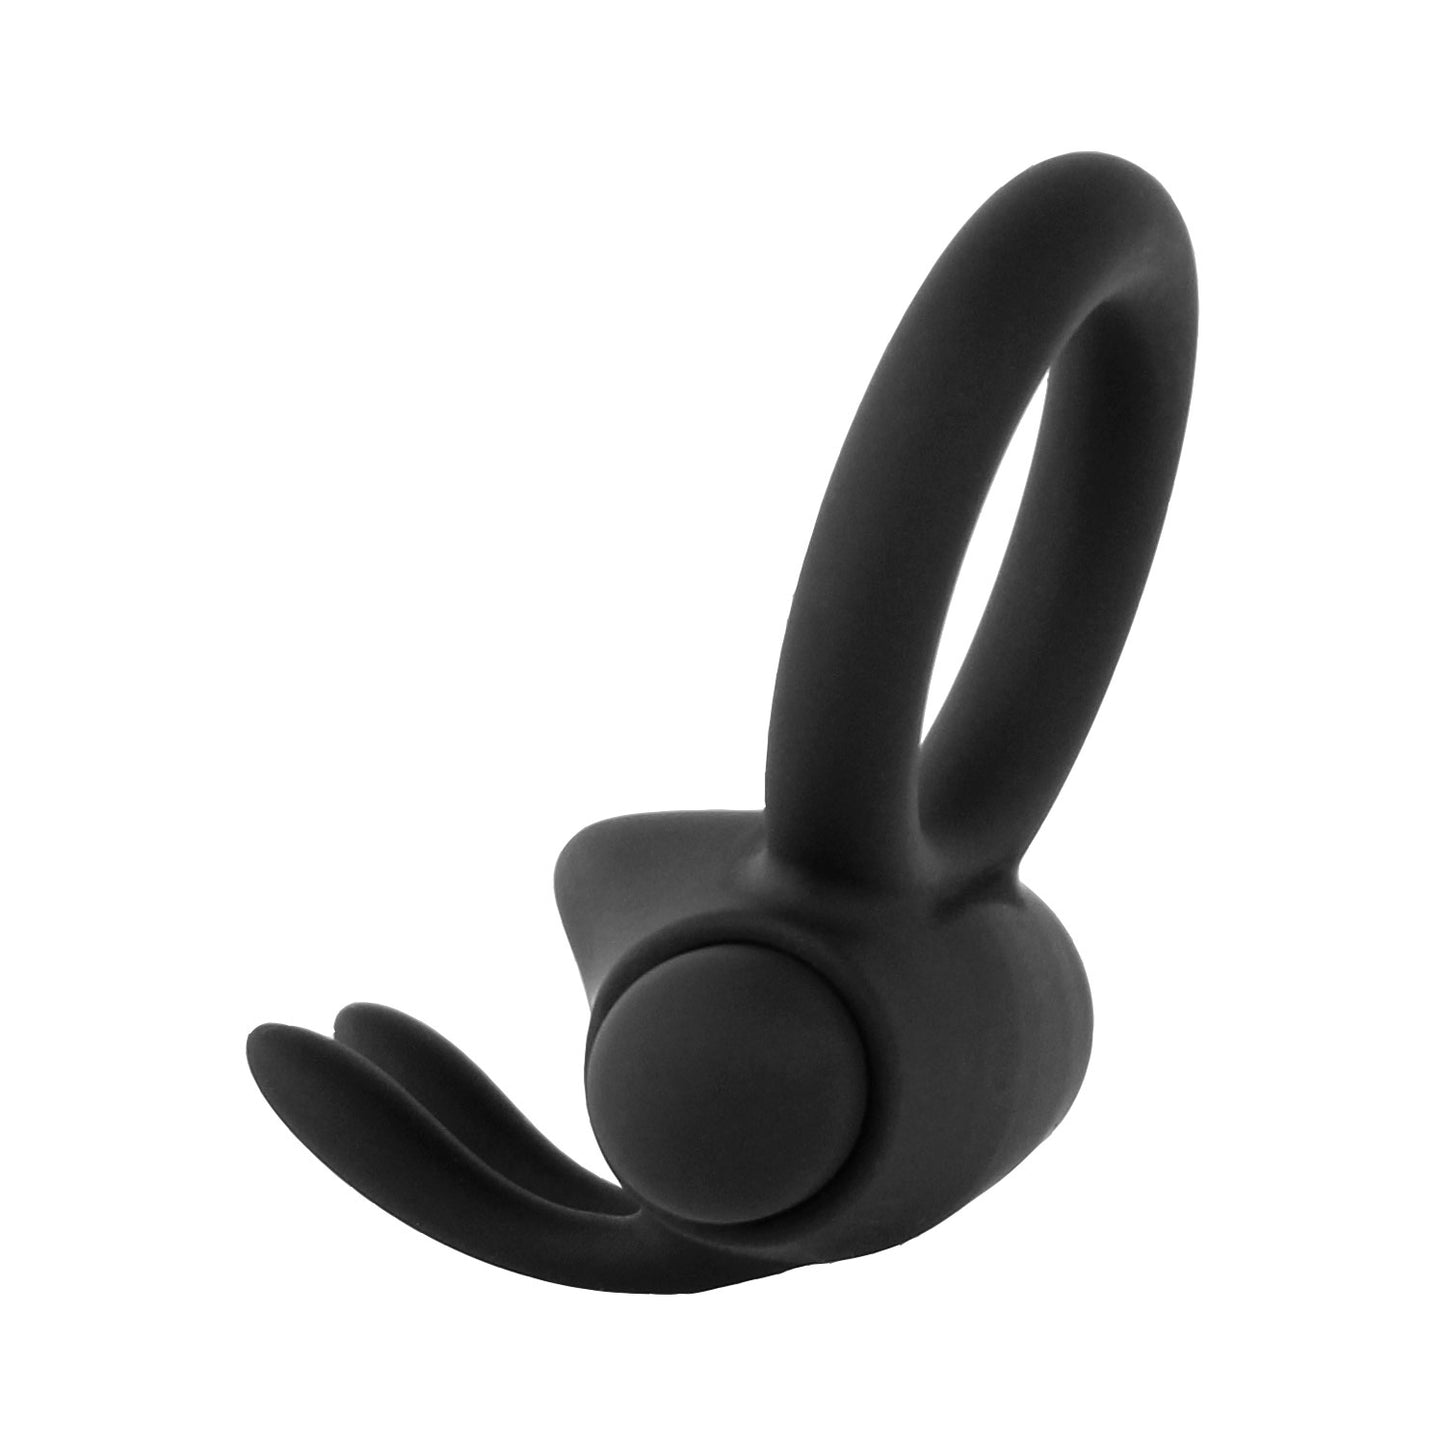 The Horny Company - John O BOOST Rechargeable Rabbit Vibrating Single Cock Ring